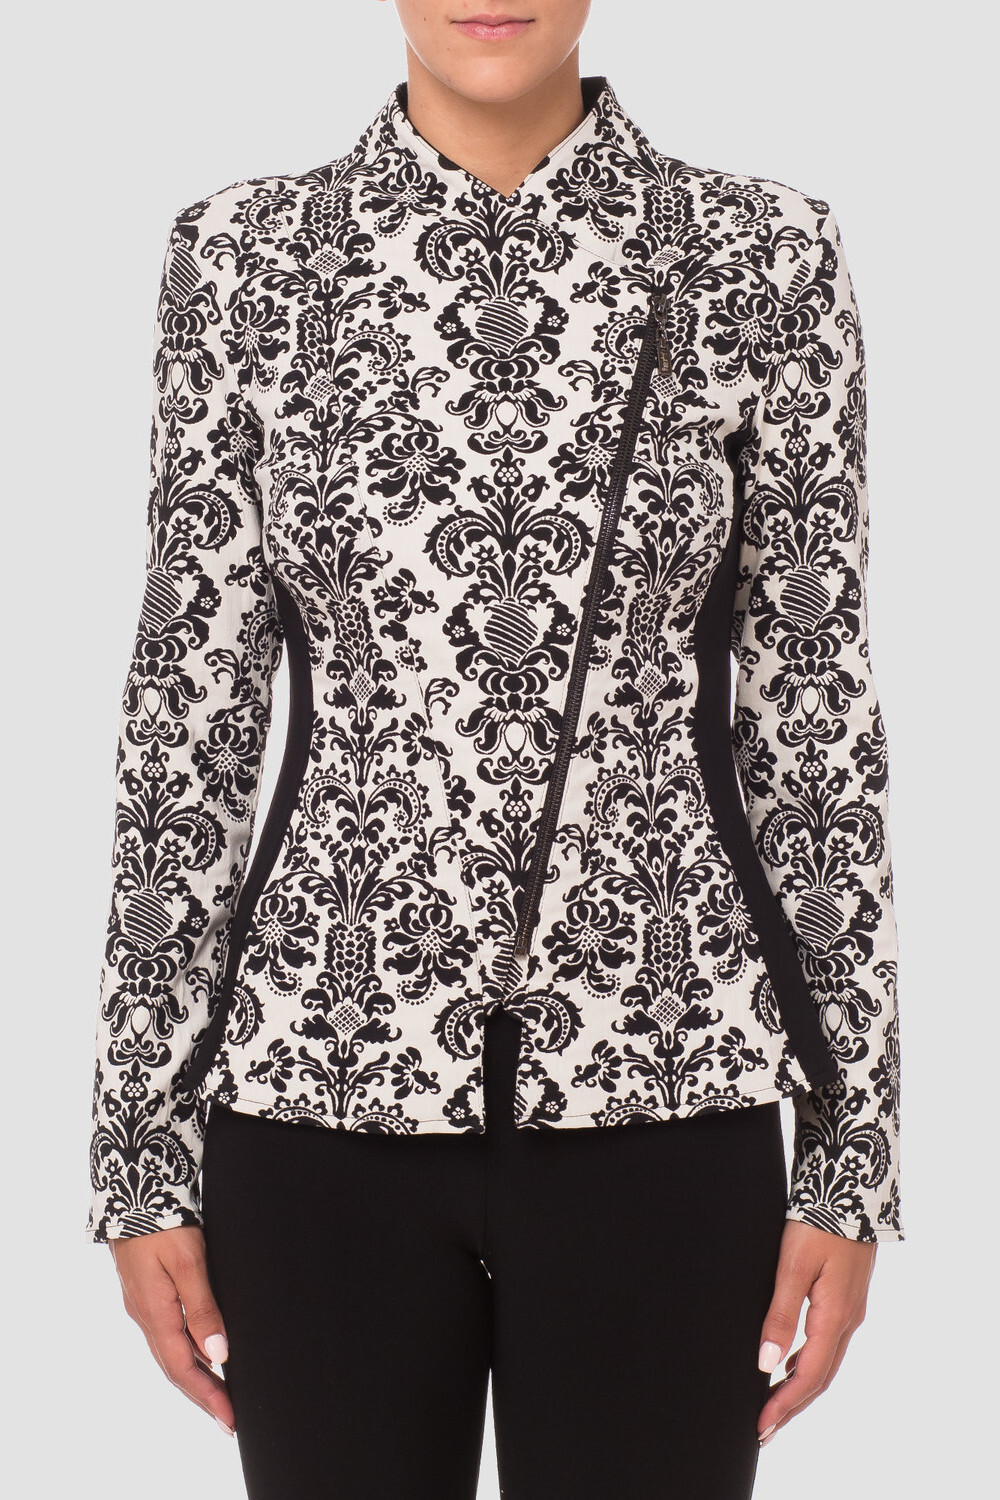 Joseph Ribkoff jacket style 174840. Black/ecru